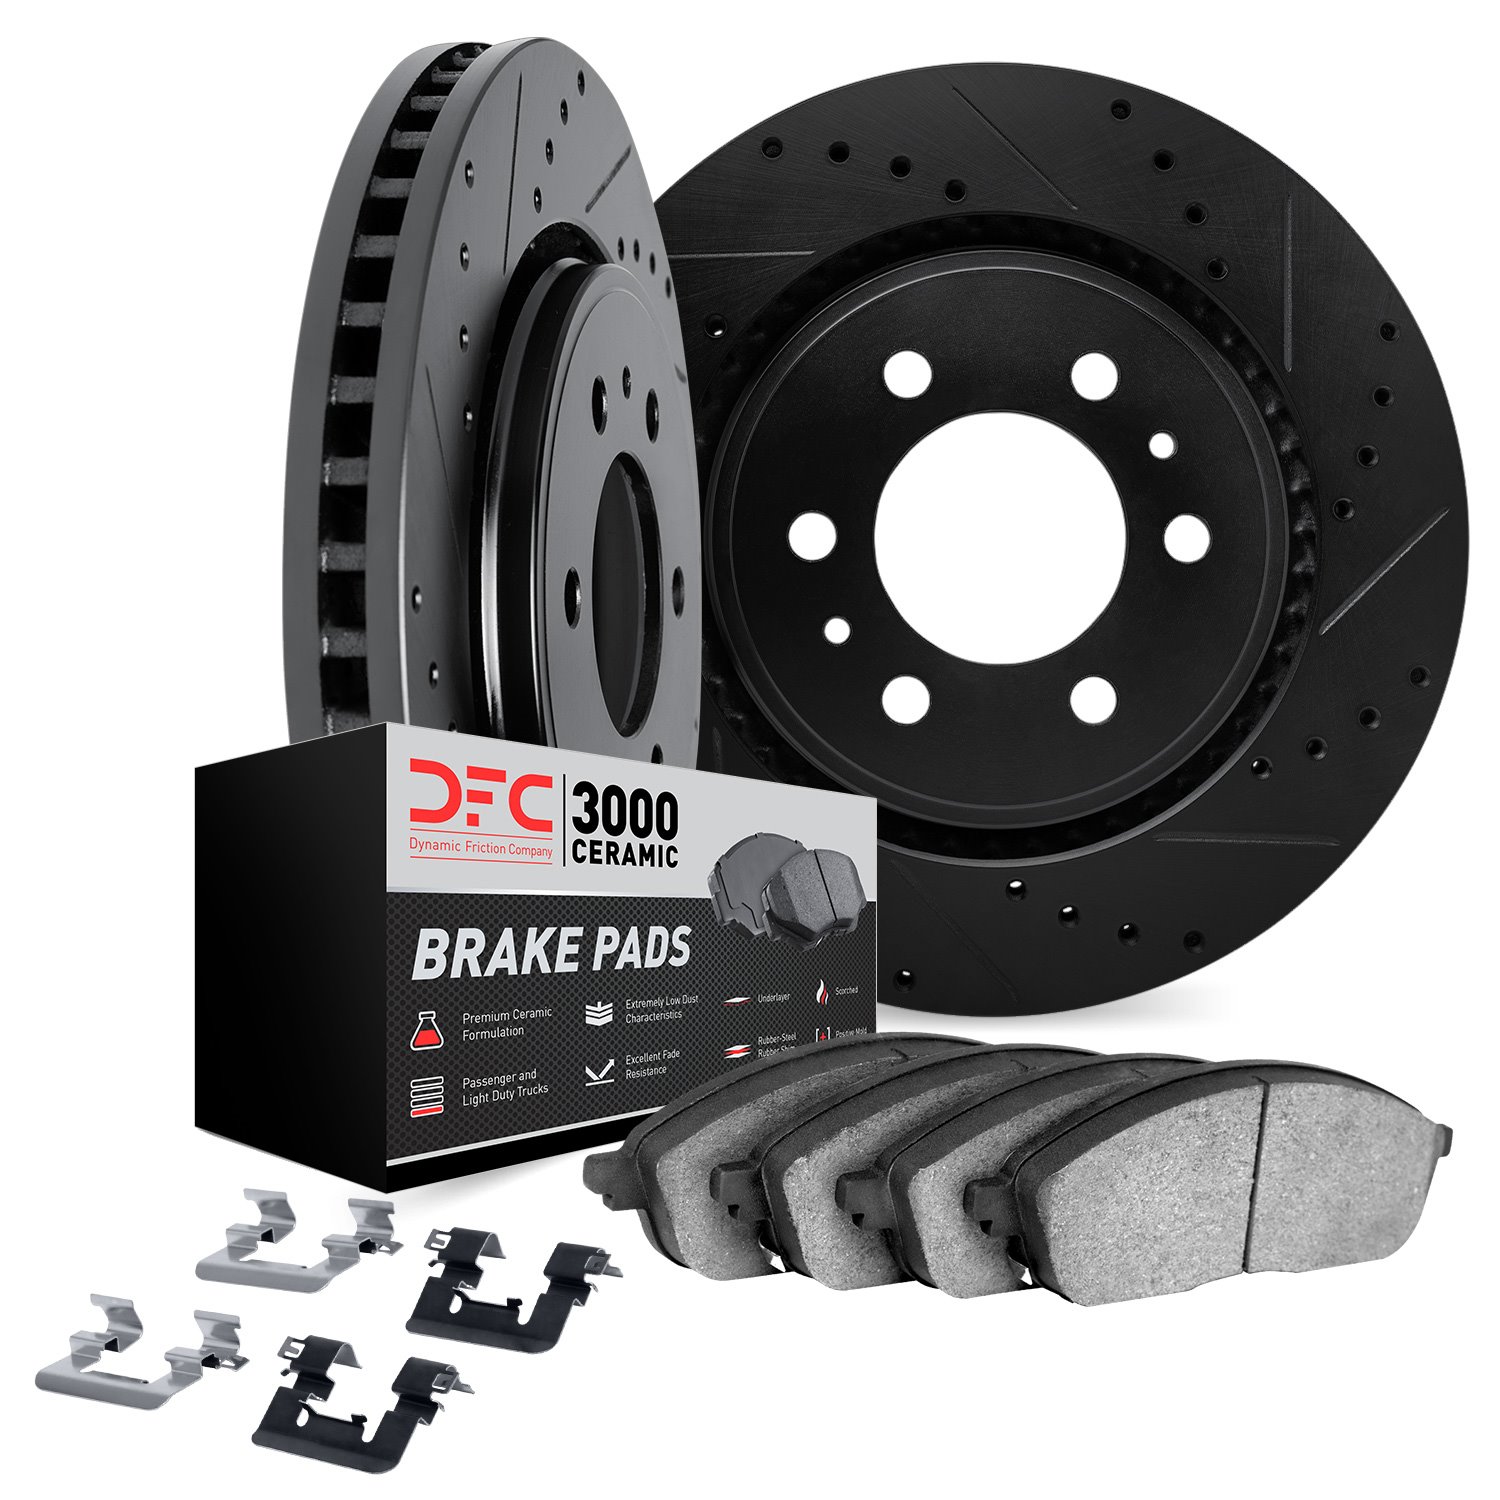 8312-67131 Drilled/Slotted Brake Rotors with 3000-Series Ceramic Brake Pads Kit & Hardware [Black], Fits Select Infiniti/Nissan,